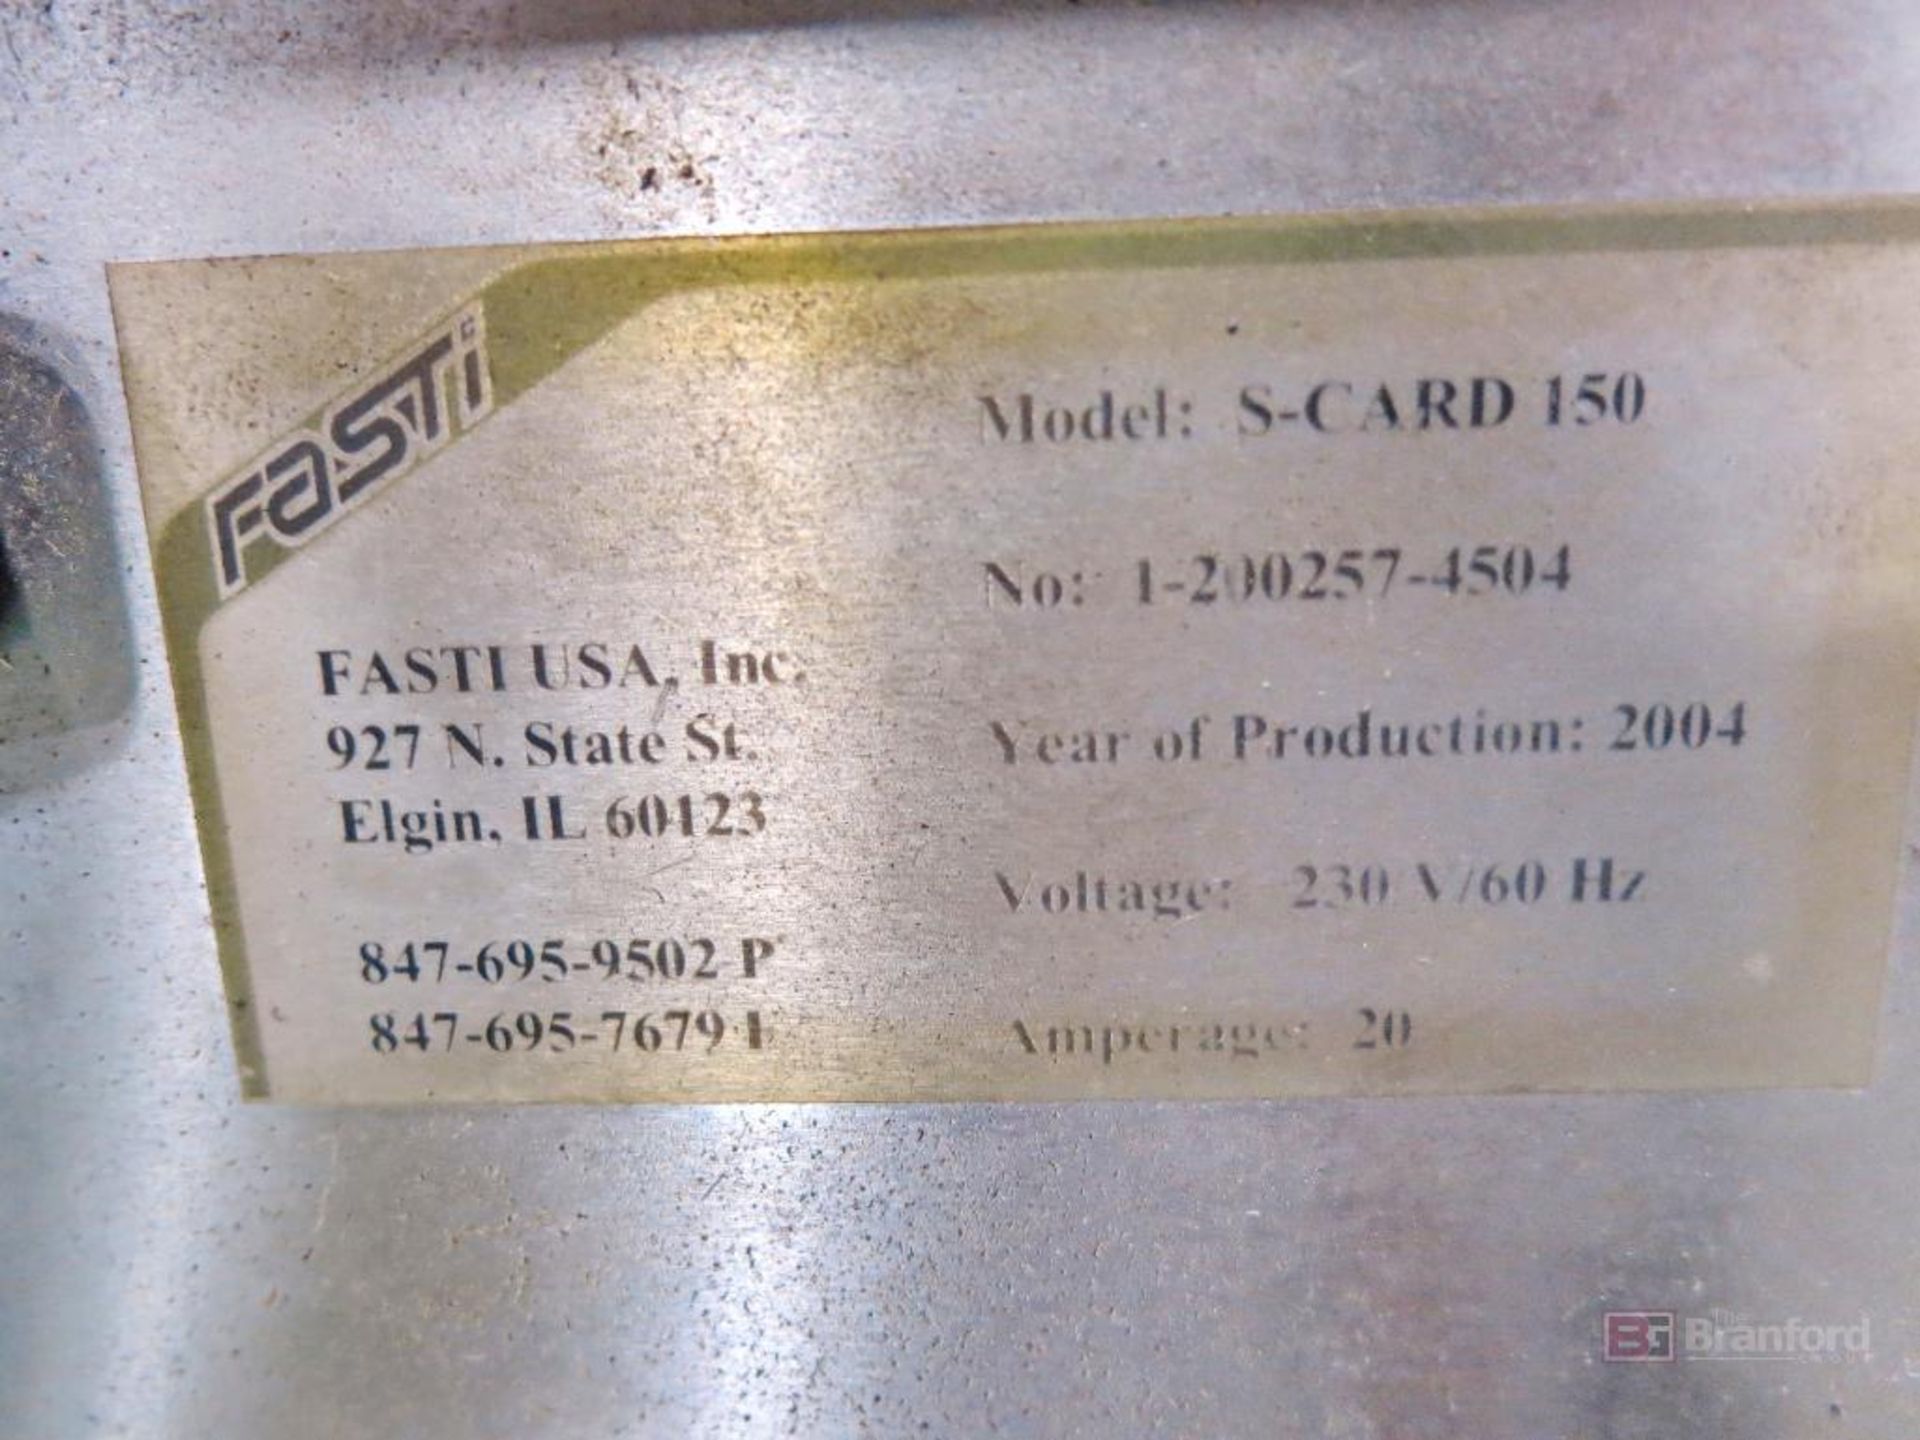 Fasti Model S-Card 150 Resin Material Dryer - Image 3 of 3